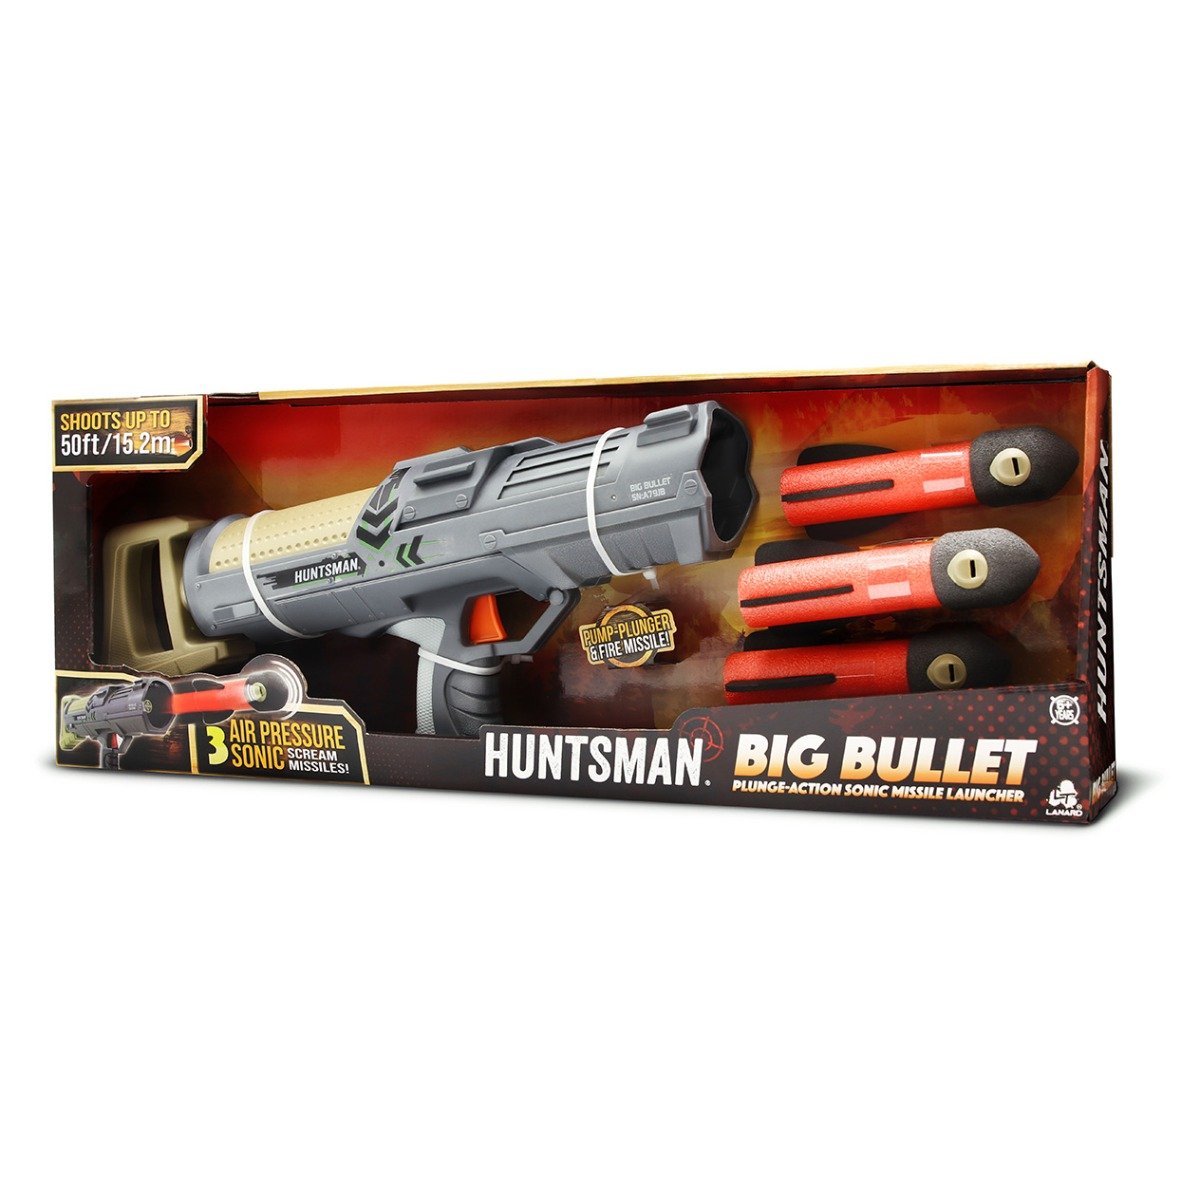 Lansator Big Bullet cu 3 rachete din burete, Huntsman, Lanard Toys Aer imagine 2022 protejamcopilaria.ro